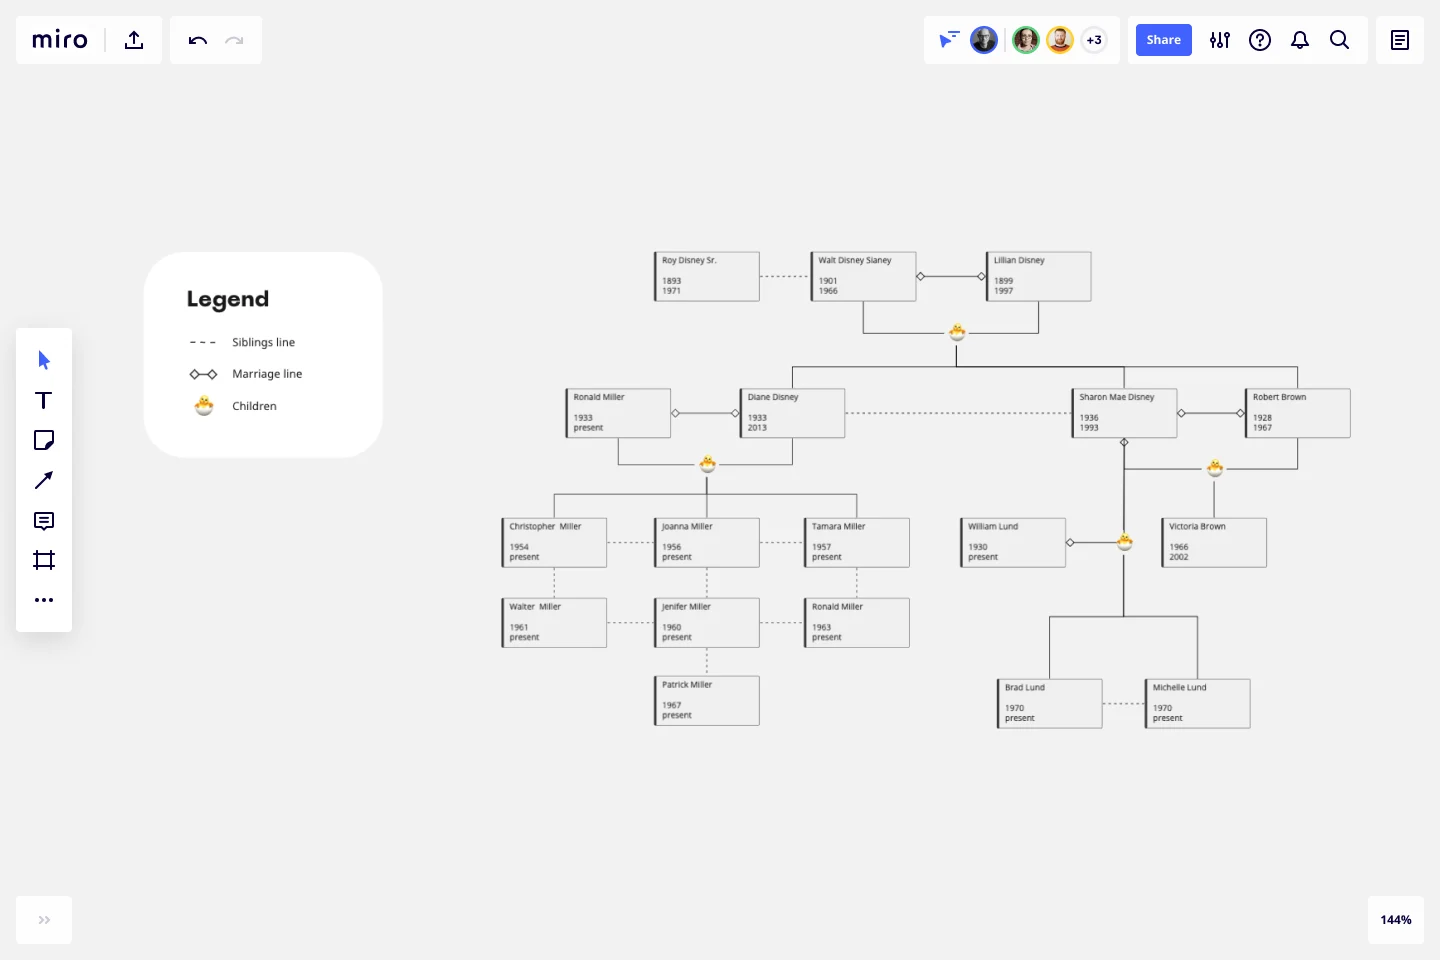 Family tree diagram template-web